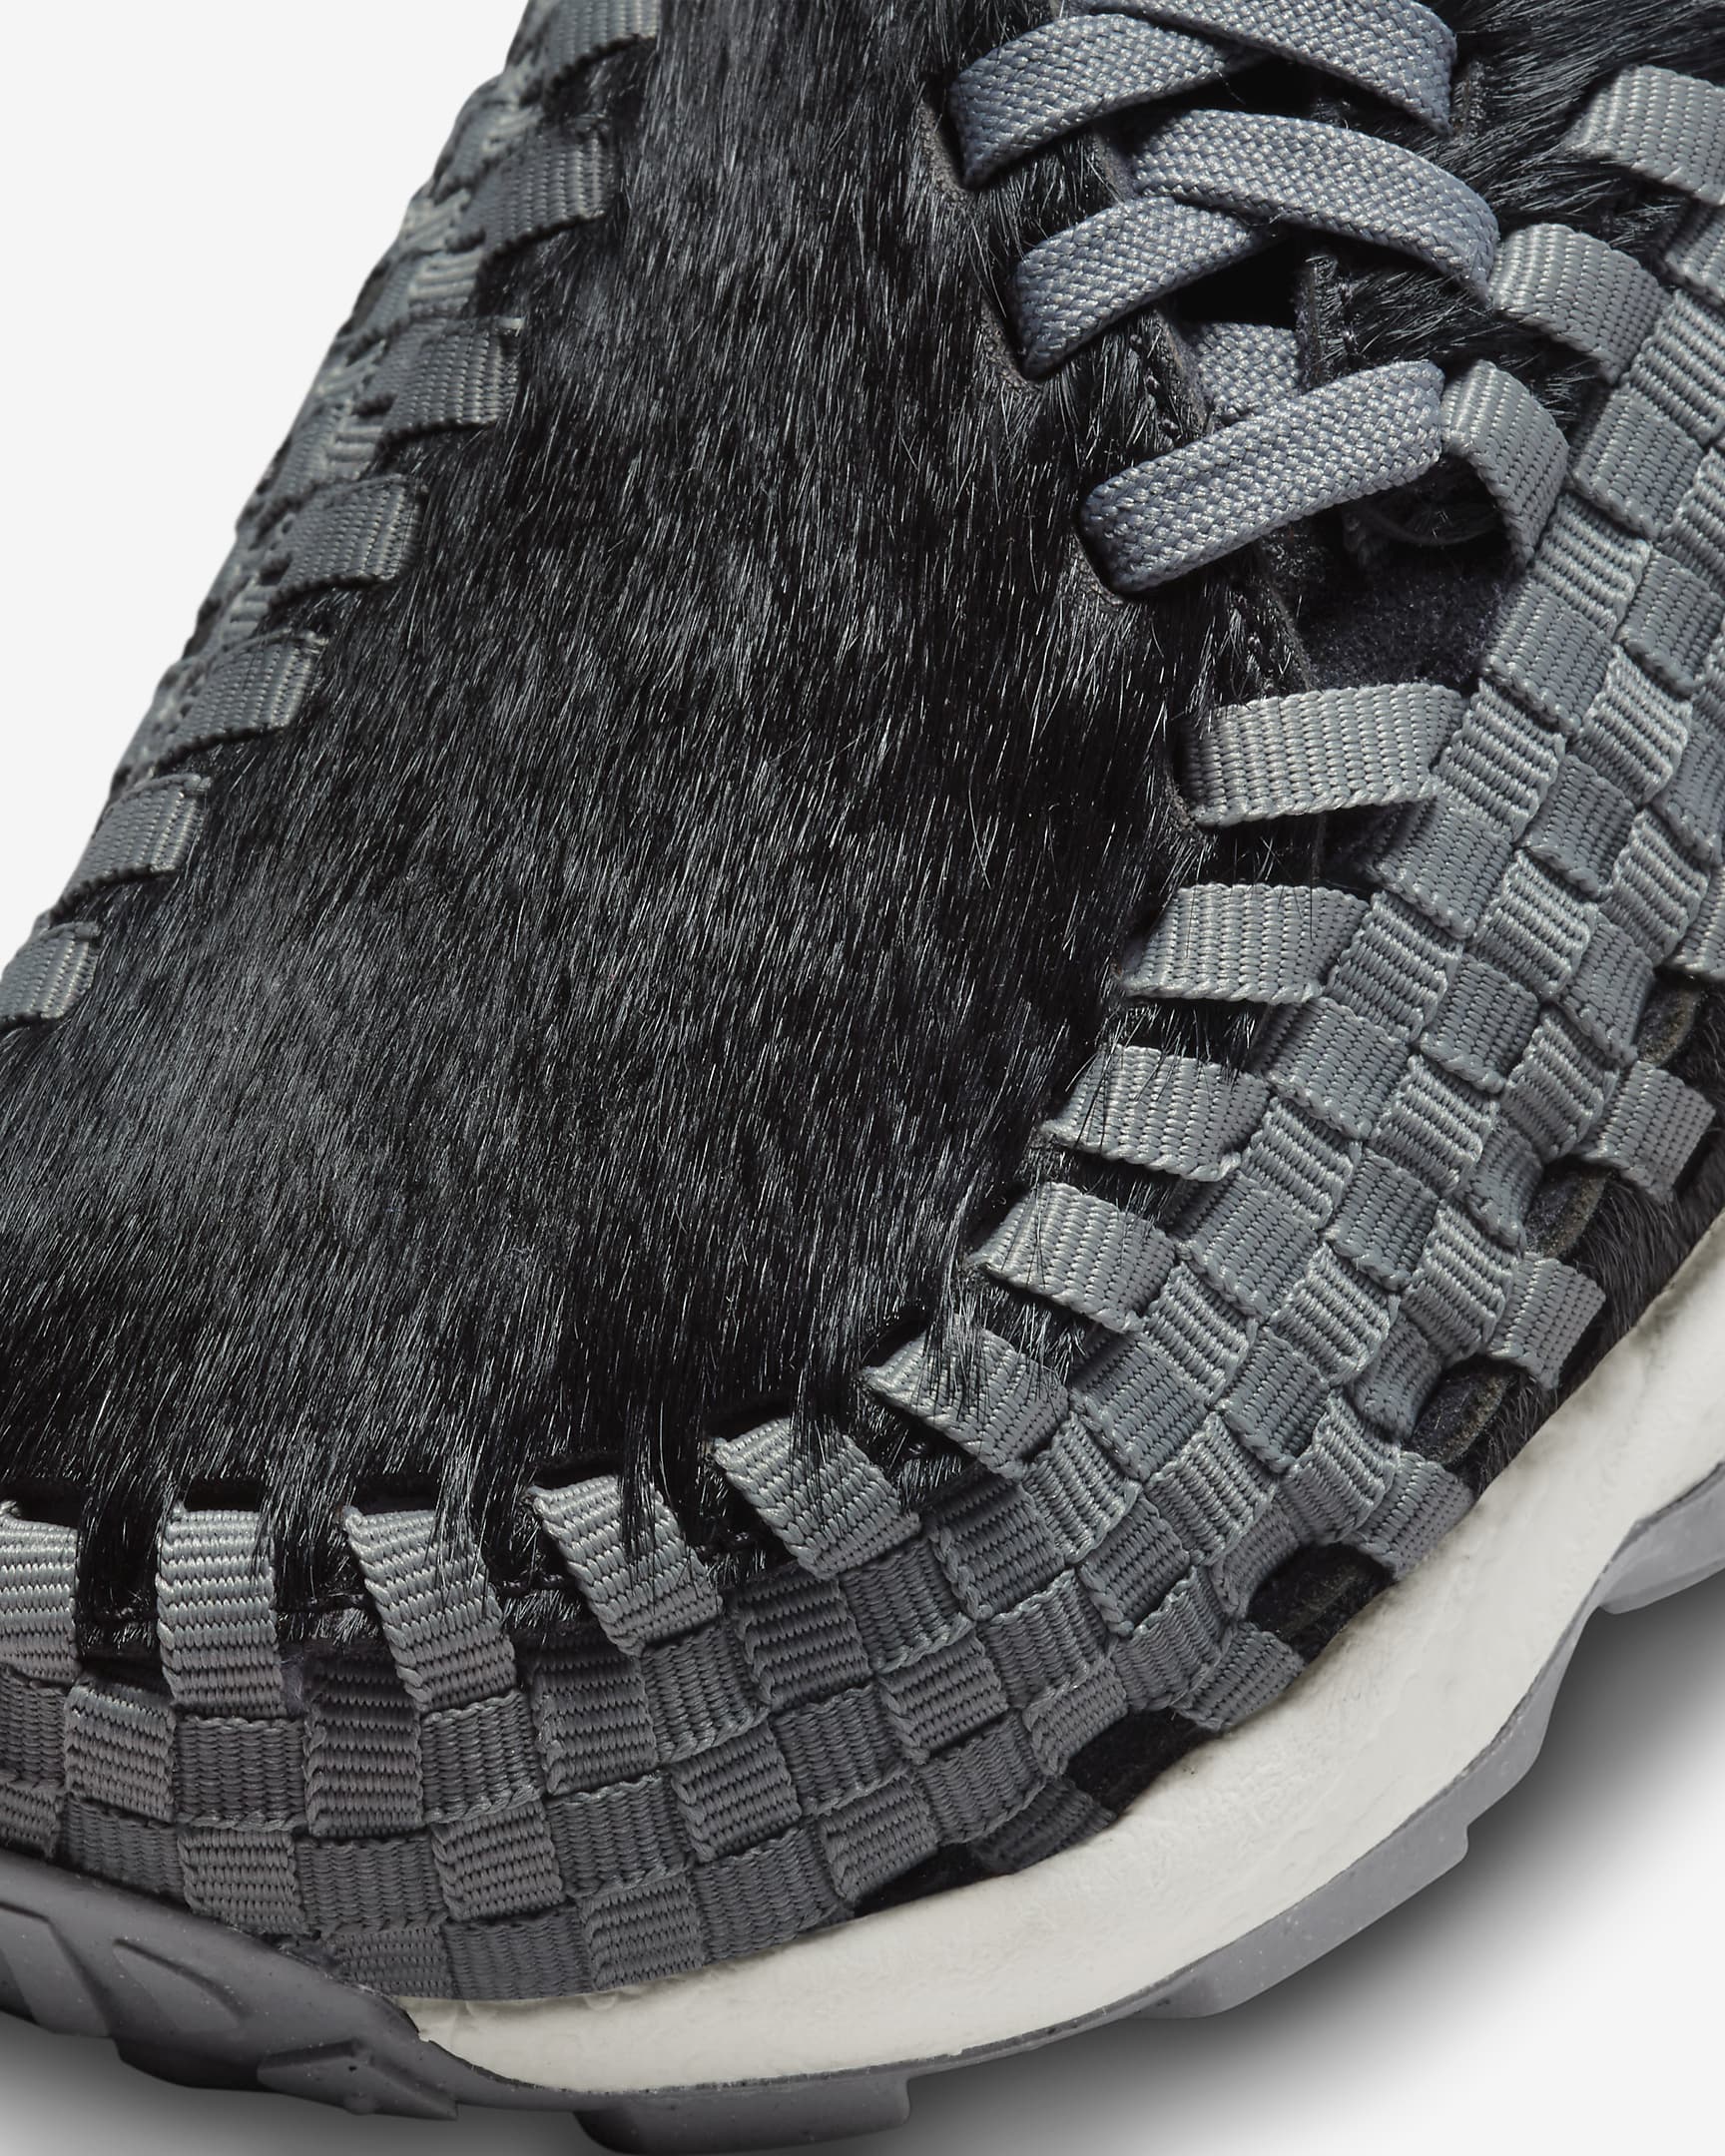 Nike Air Footscape Woven Women's Shoes - Black/Sail/Smoke Grey